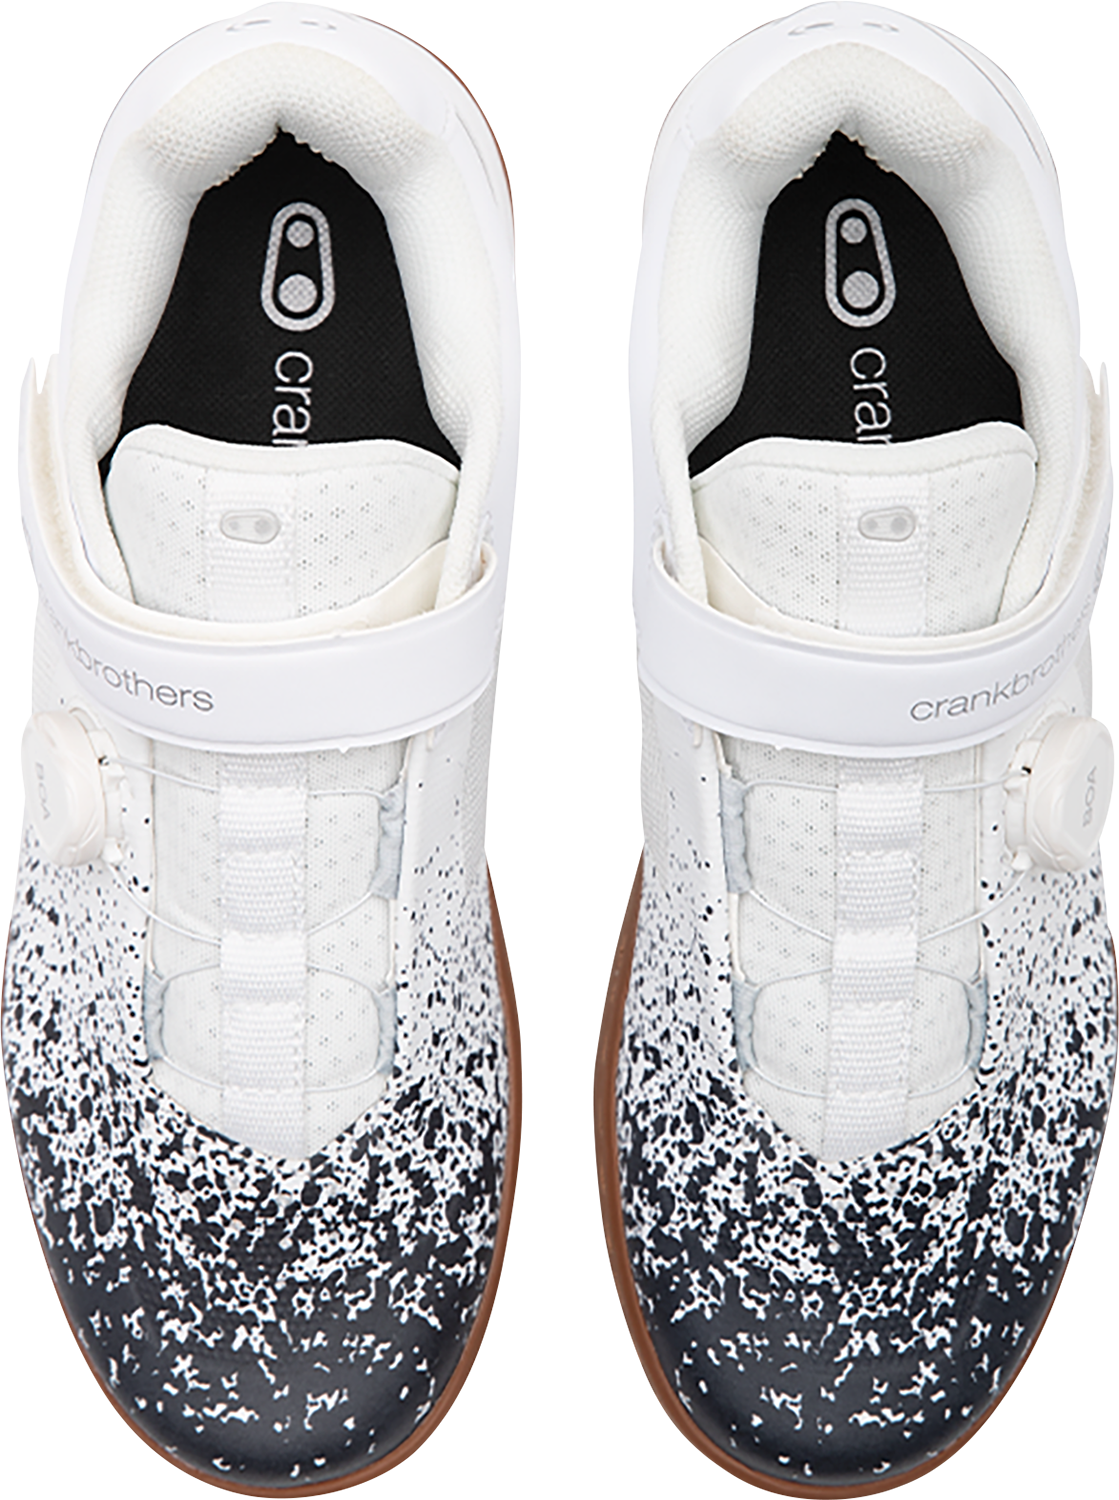 Stamp BOA® Shoes - Black/White - US 8